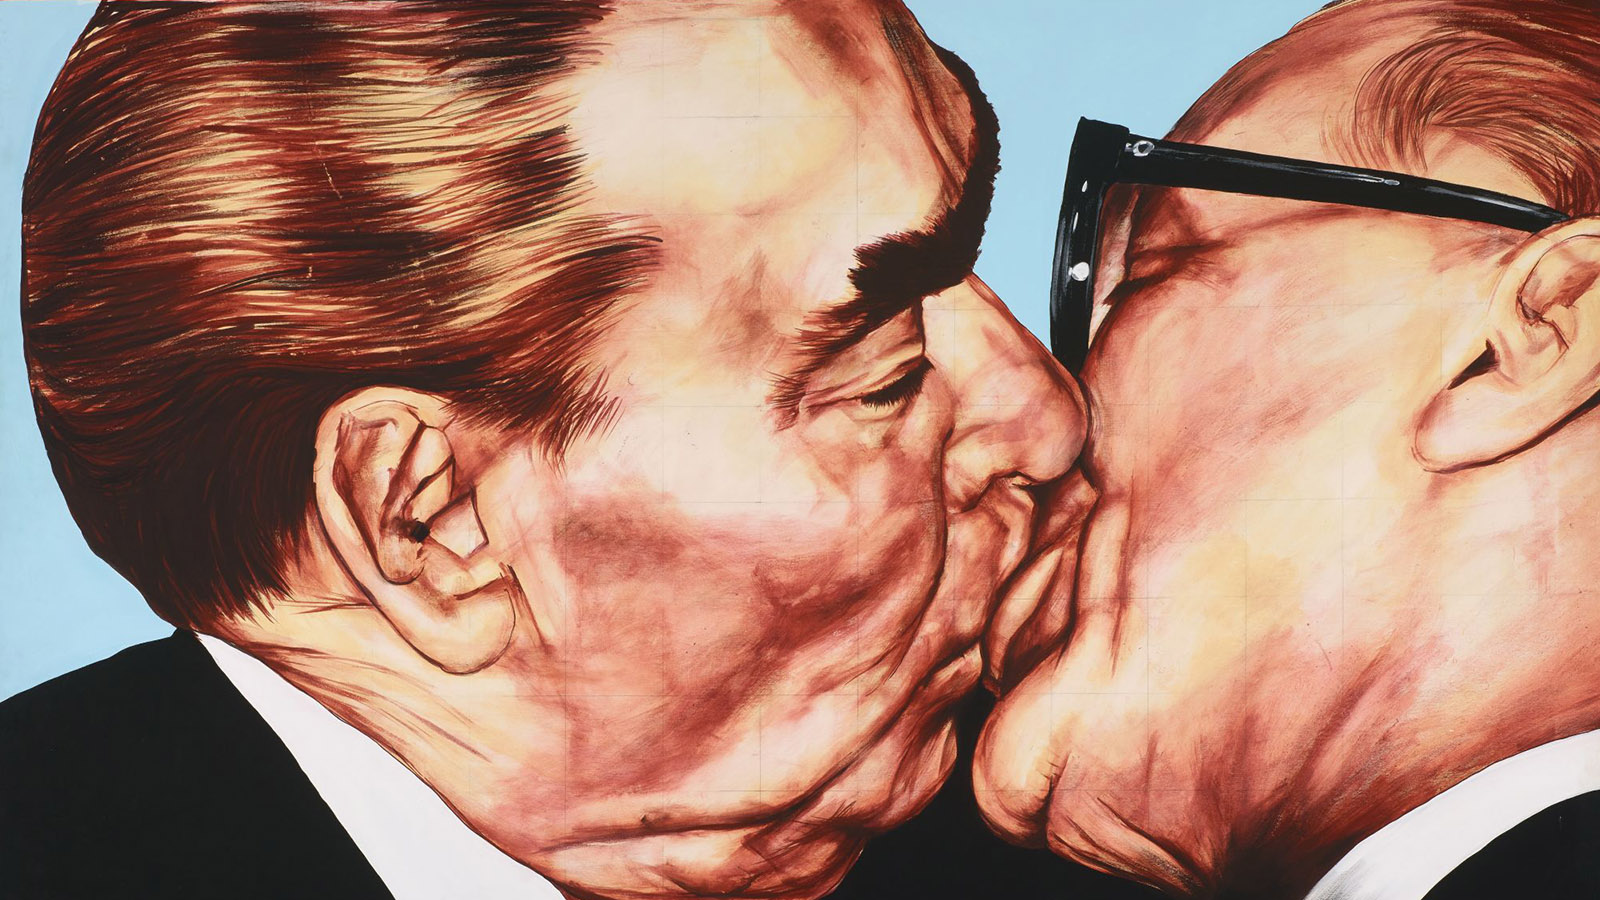 Враги целуют жадно 2 часть. Брежнев и Хонеккер поцелуй. Поцелуй Брежнева с Хонеккером. Брежнев Хонеккер Братский поцелуй.